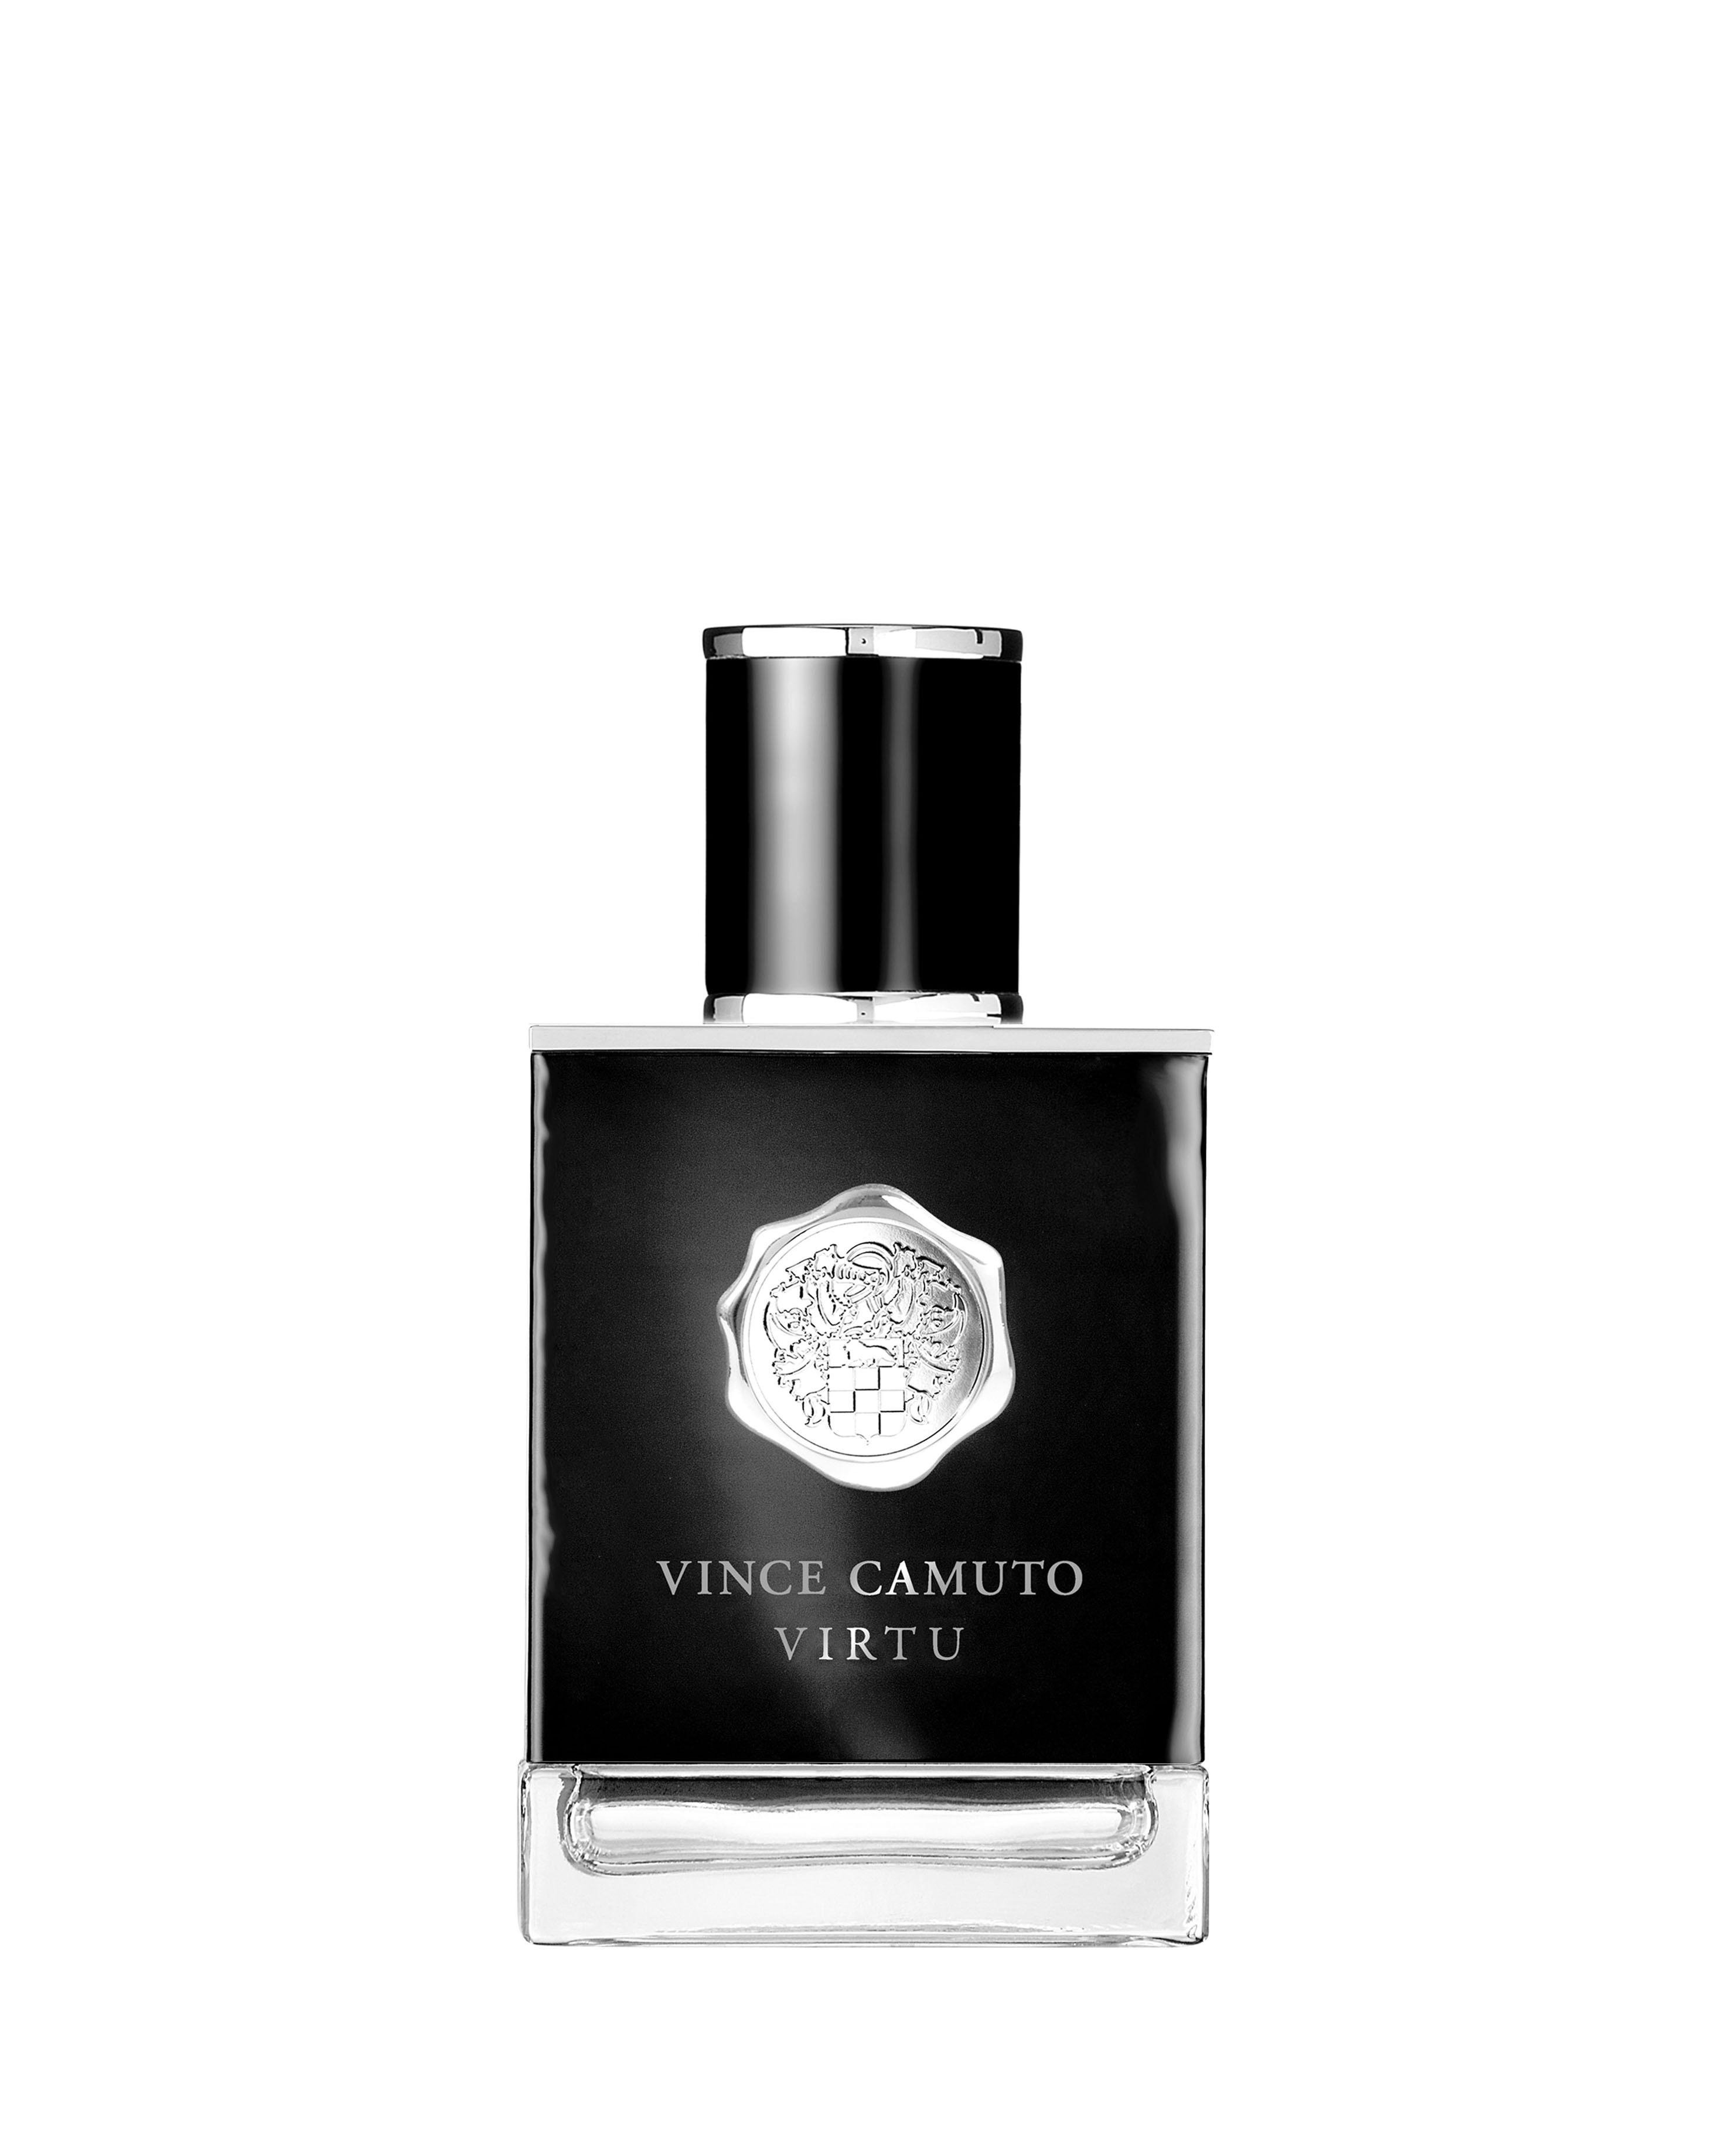 Virtu by Vince Camuto for Men - 3.4 oz EDT Spray, 3.4 oz - City Market